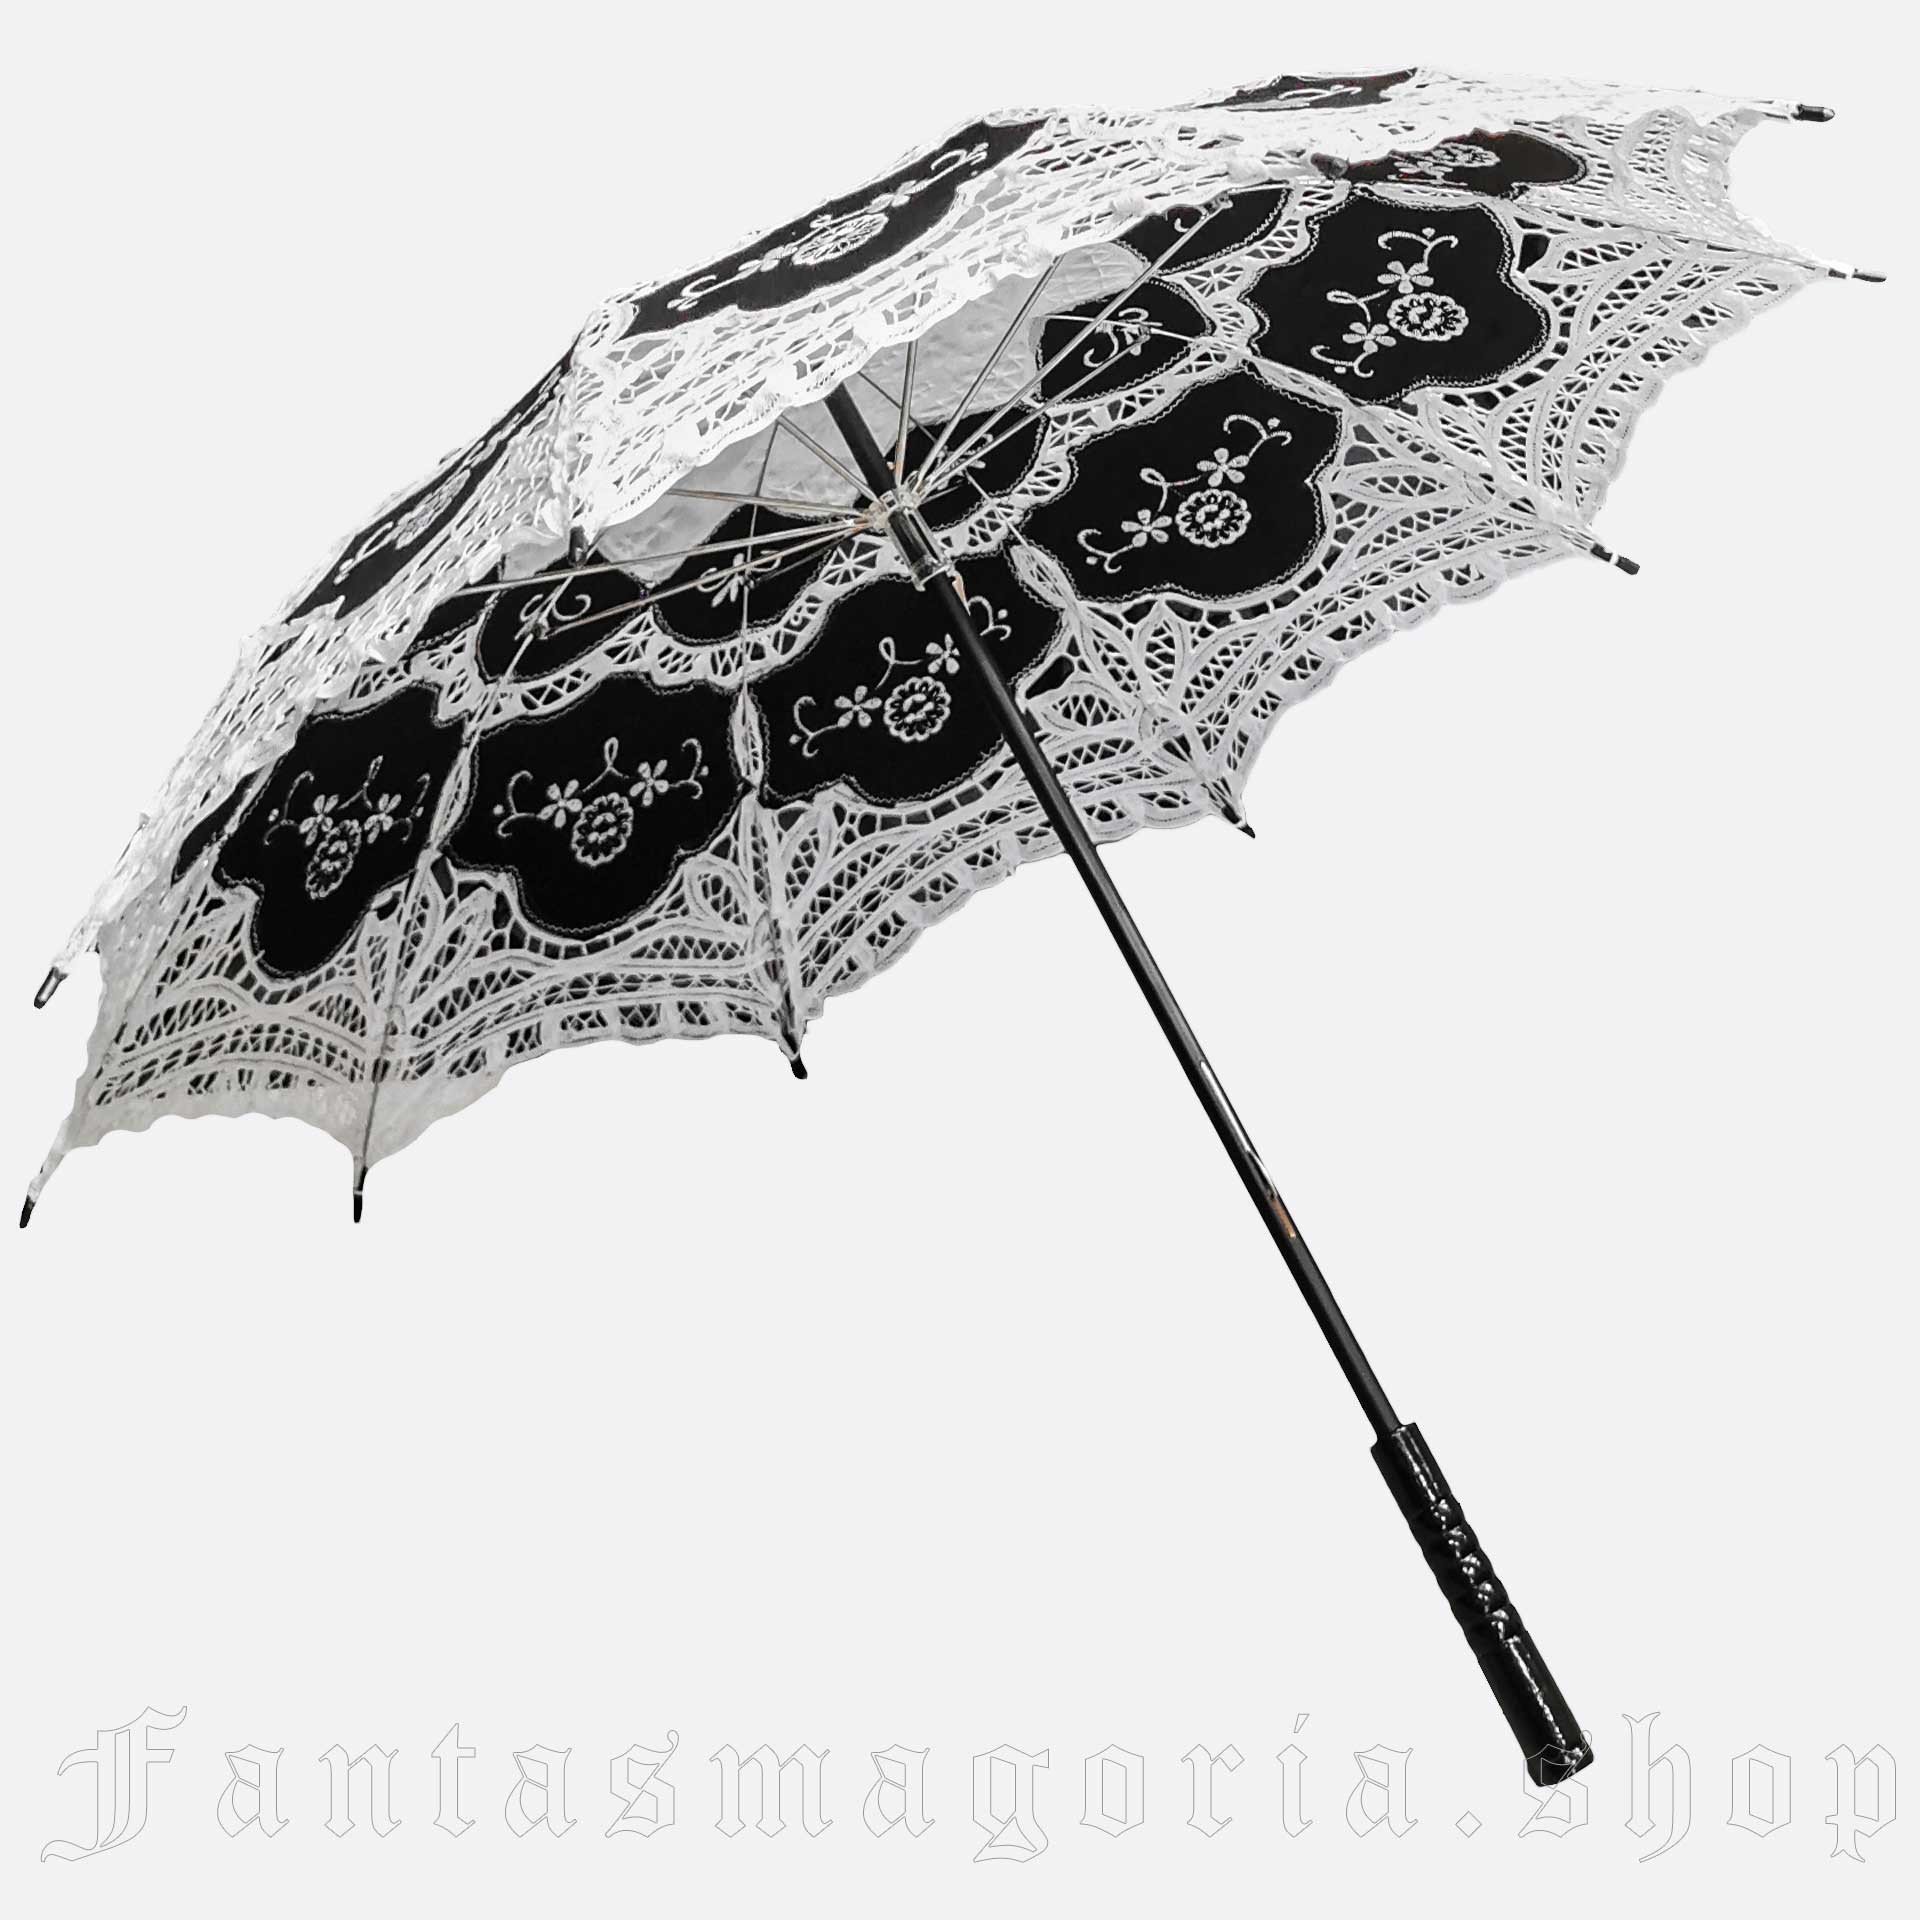 Gothic parasol.